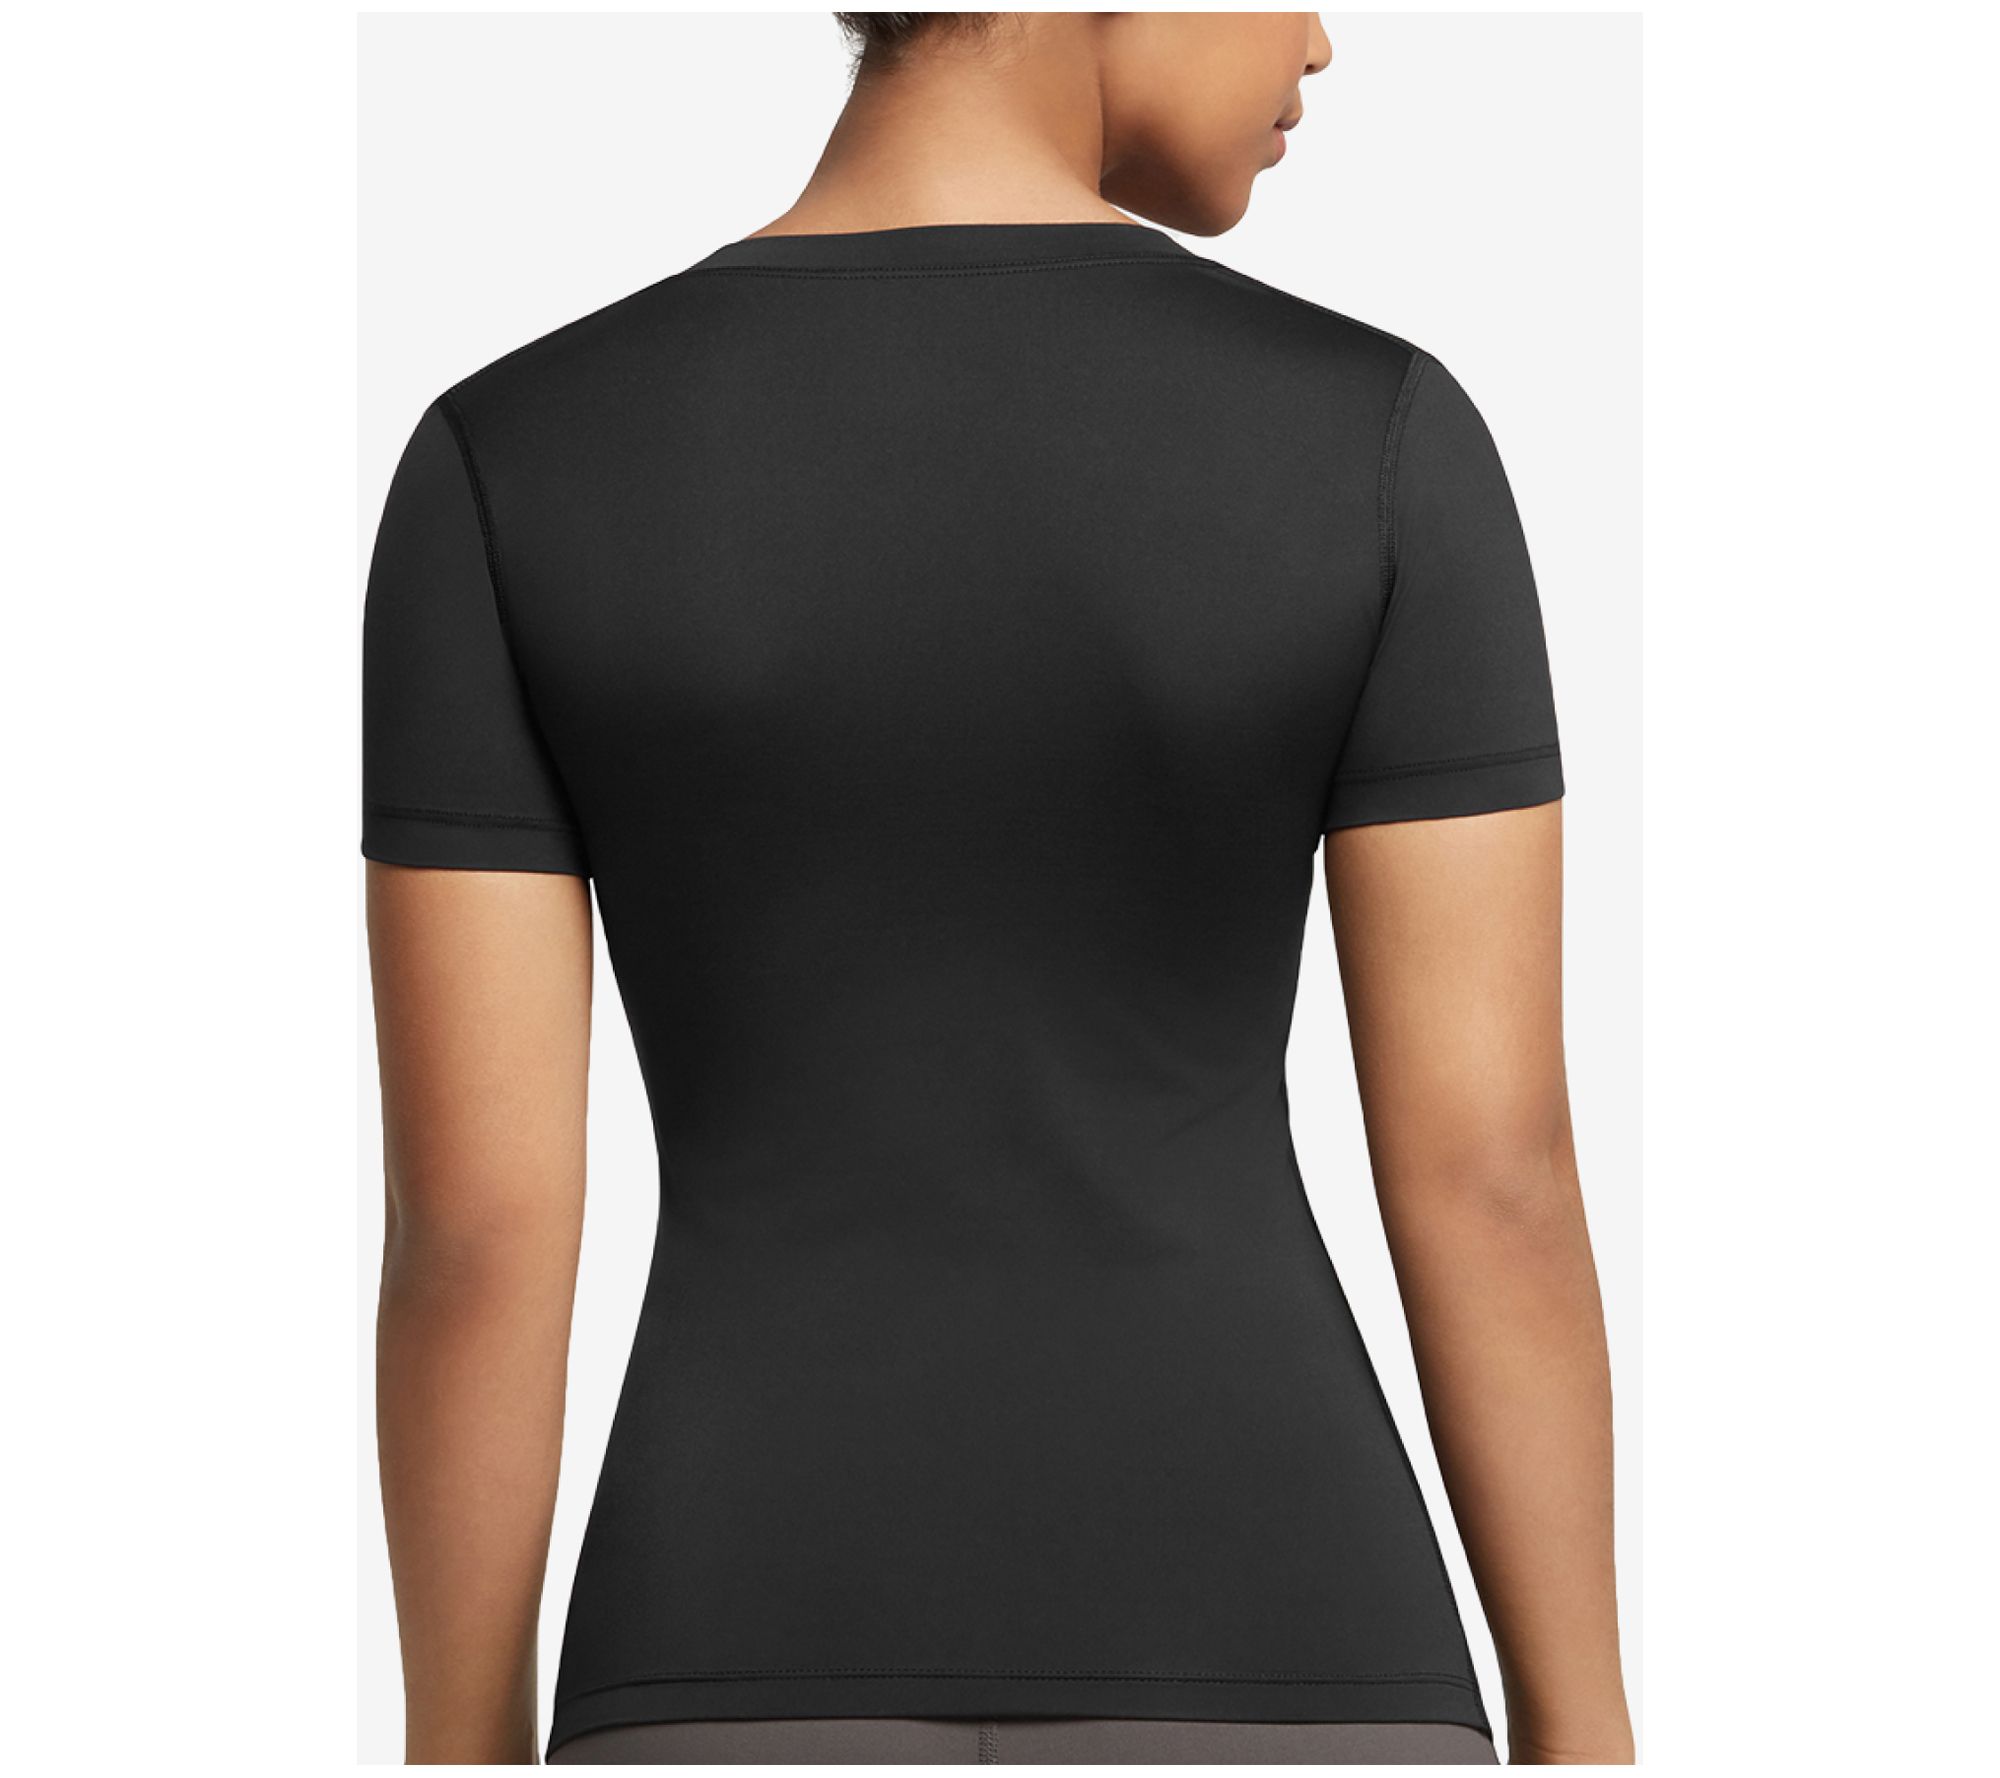 Tommie Copper Women's Short Sleeve CompressionV Neck Shirt - QVC.com